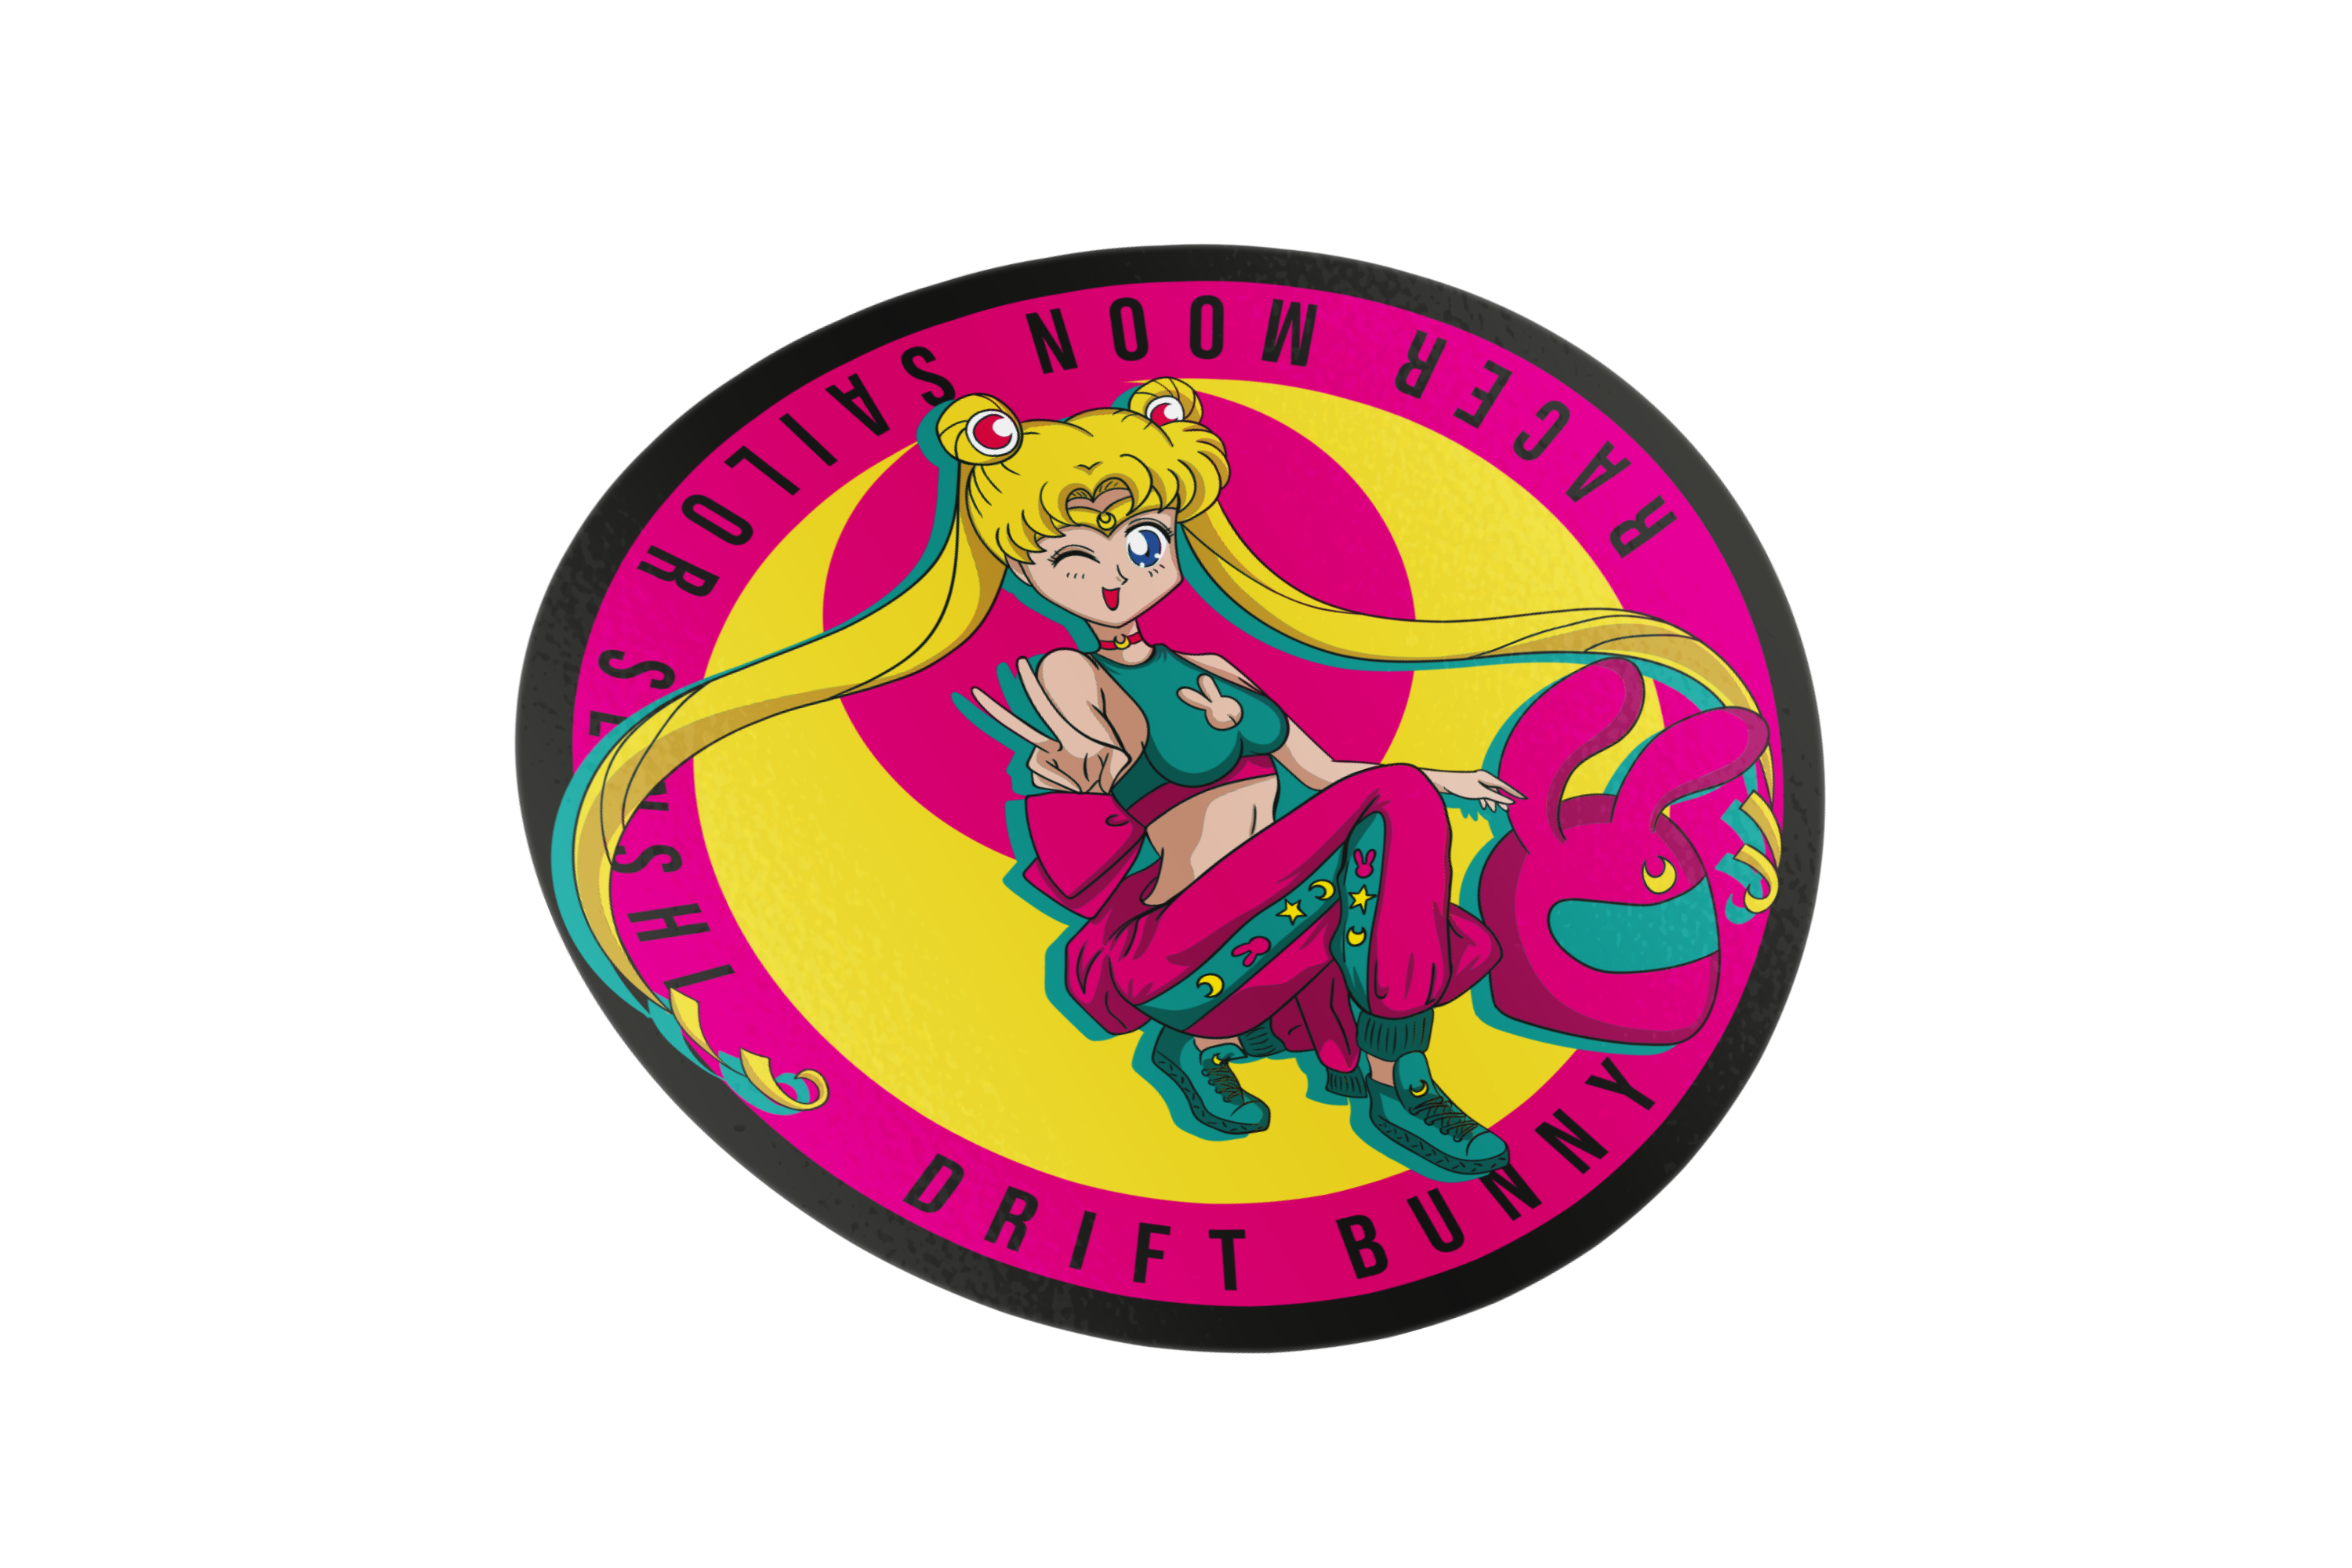 Racer moon! - Sailor moon Drift Bunny Suit Circle sticker new Drift bunny decals